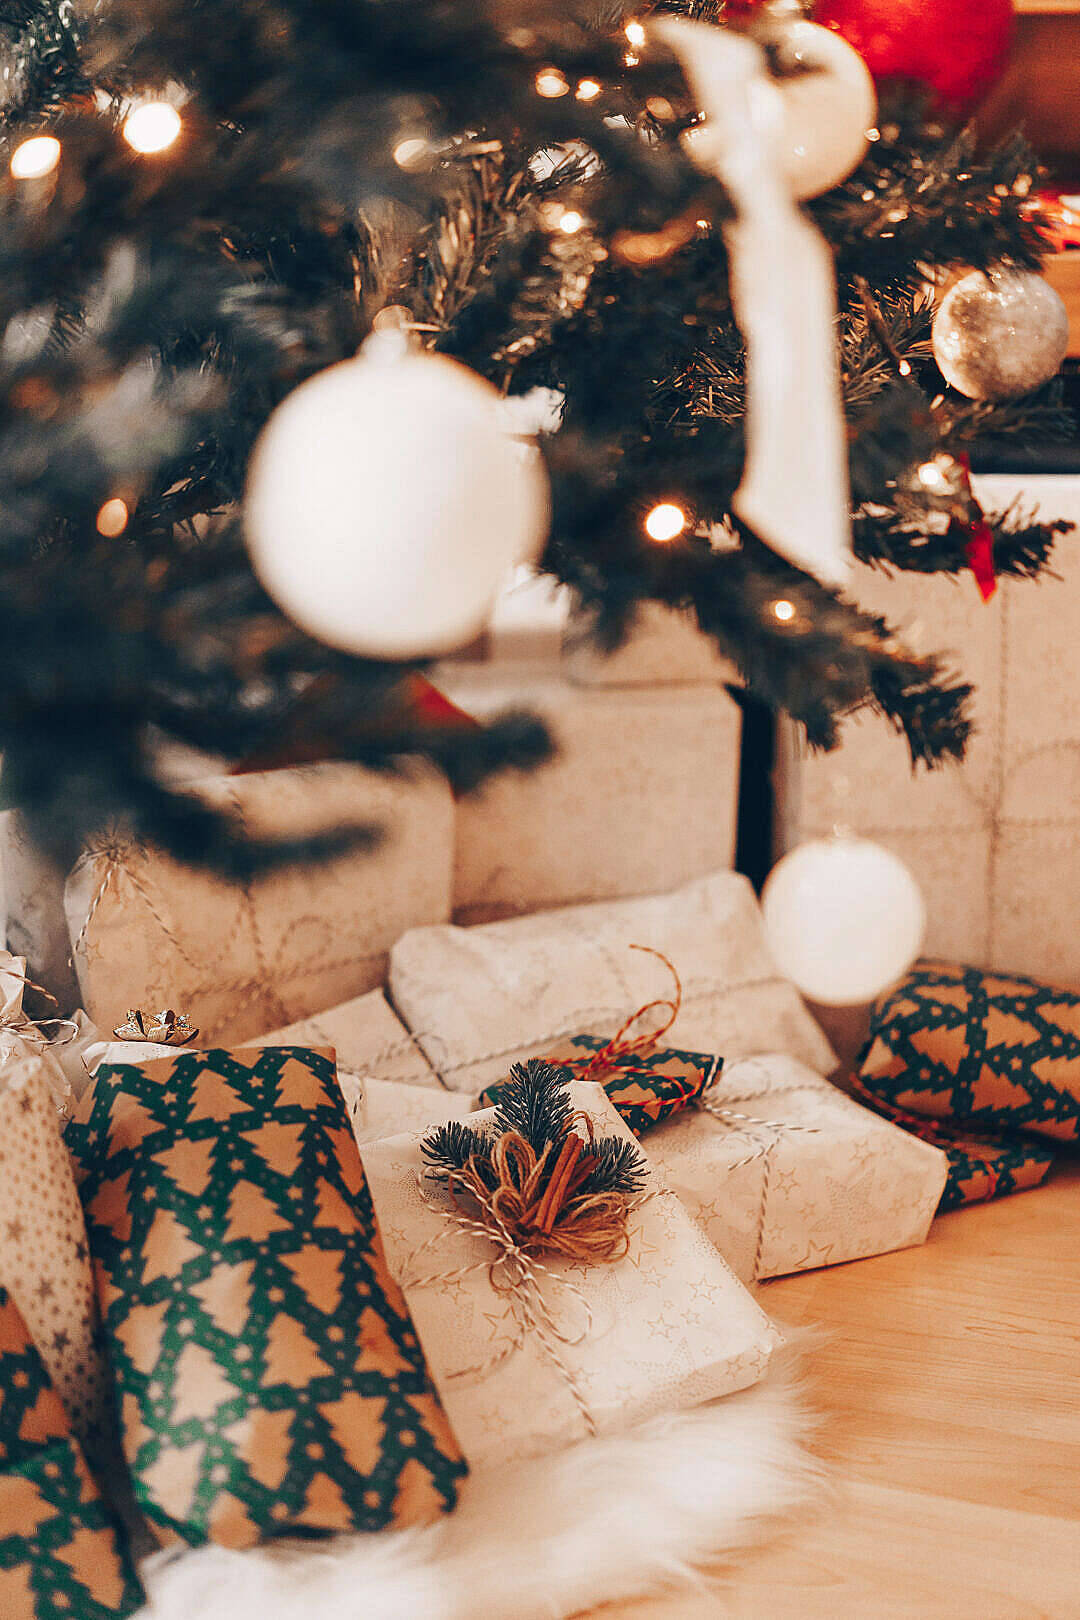 Pretty Presents Under Christmas Tree